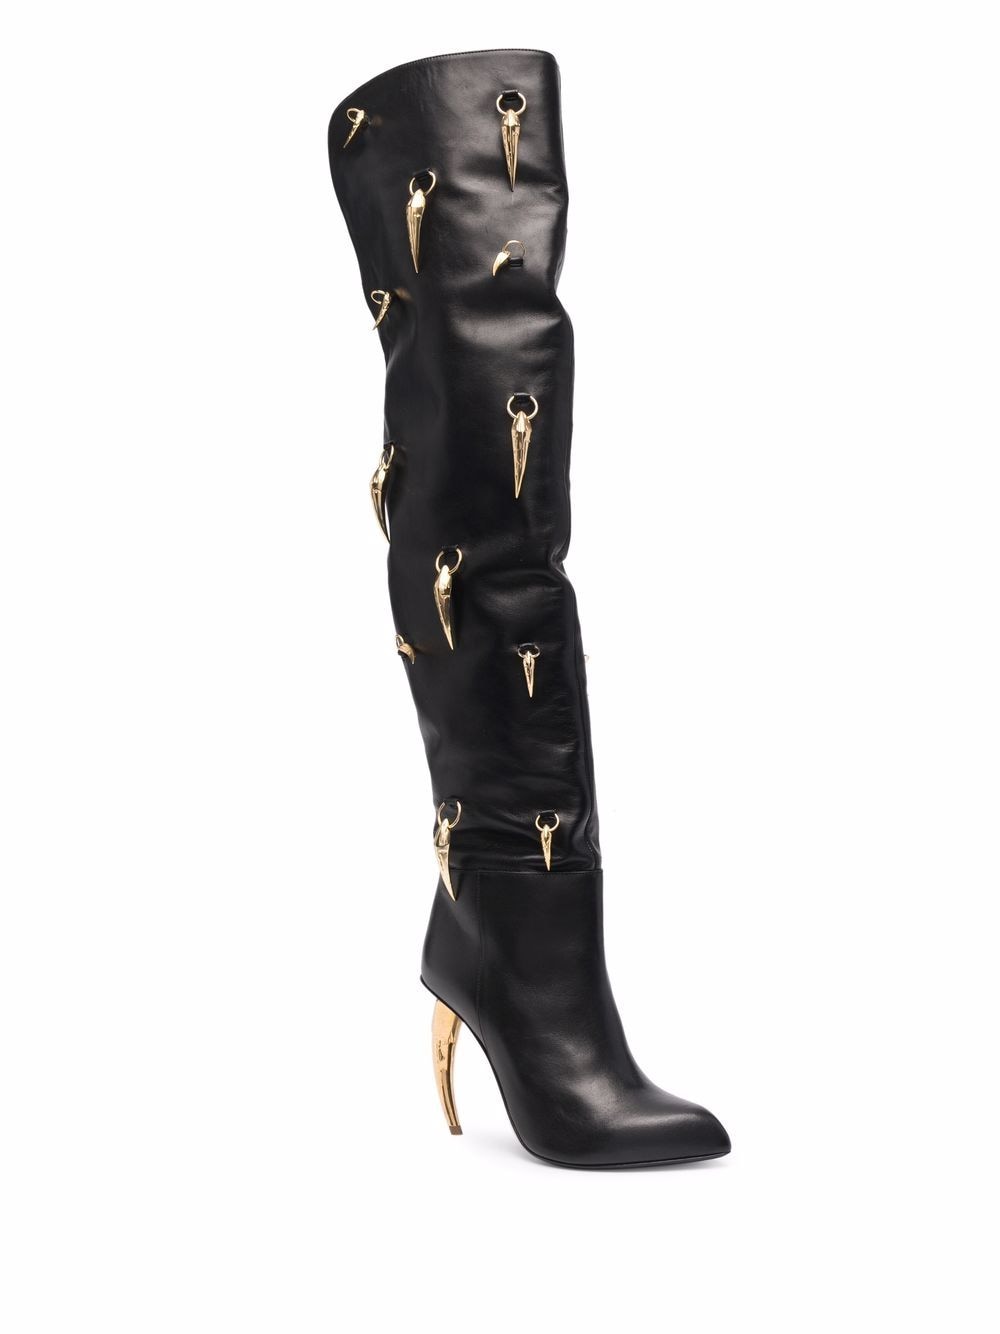 Roberto Cavalli curved-heel thigh-high Stiletto Boots - Farfetch